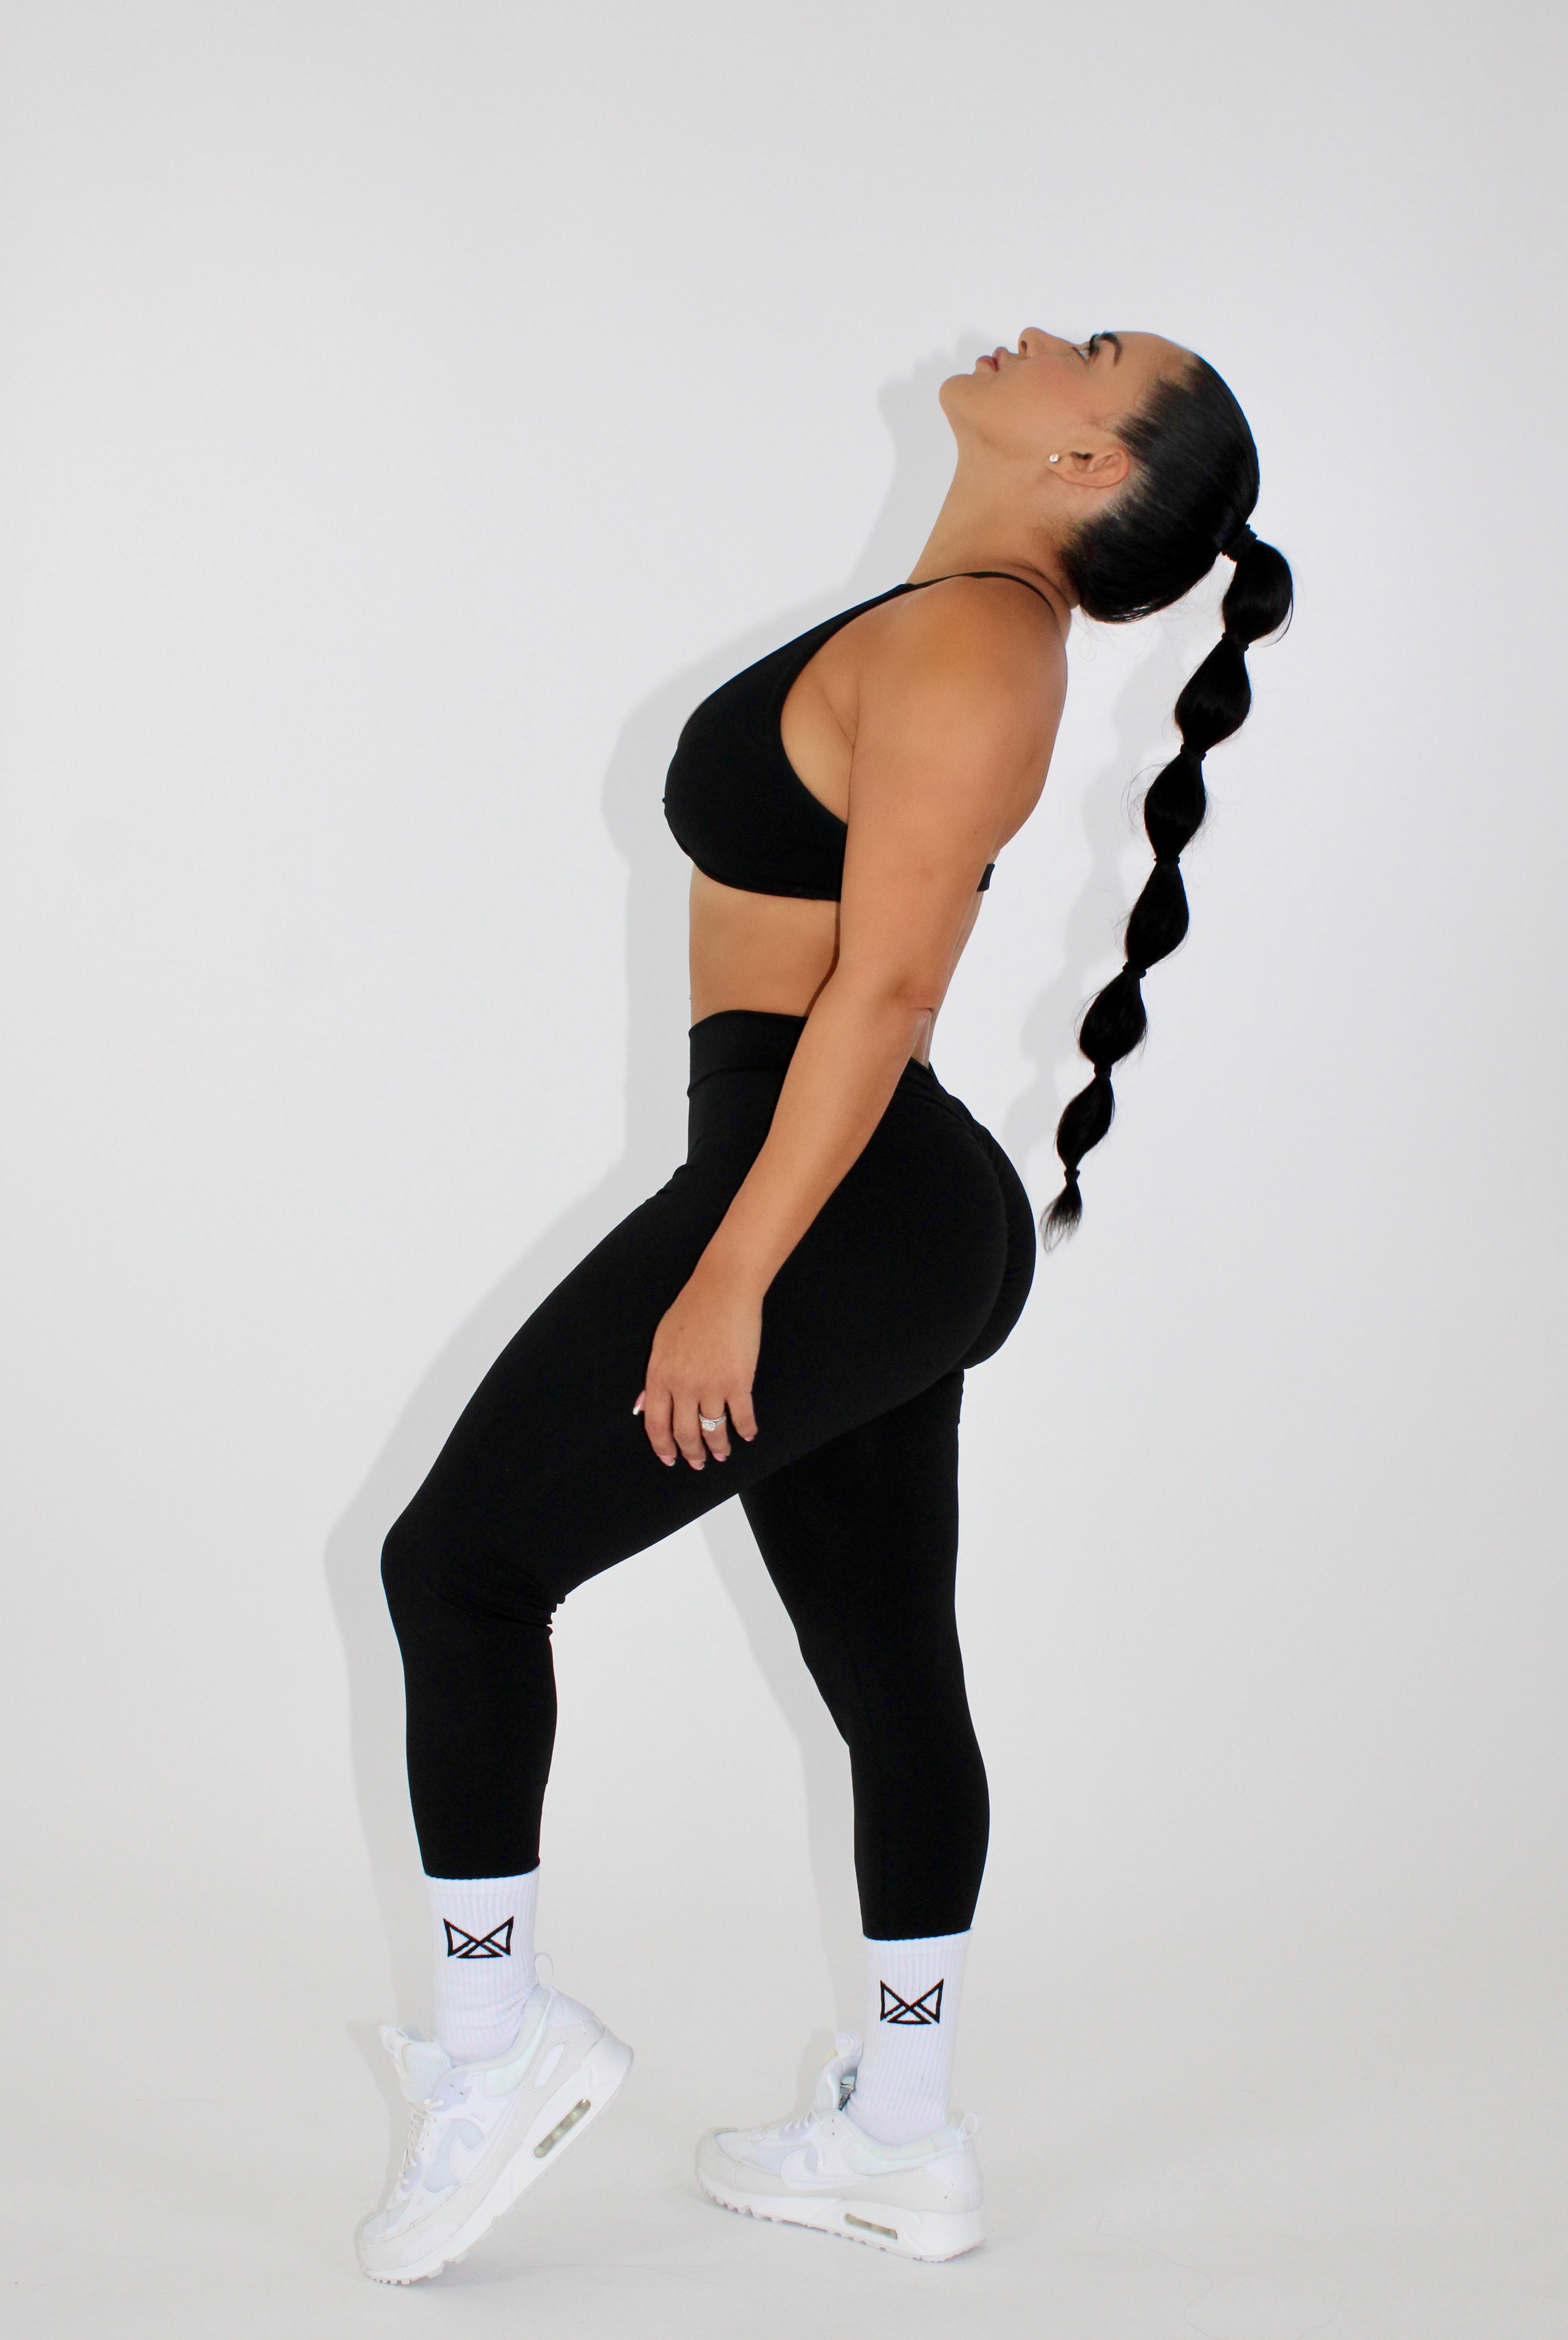 Woman wearing black leggings and a black sports bra - tilting head back